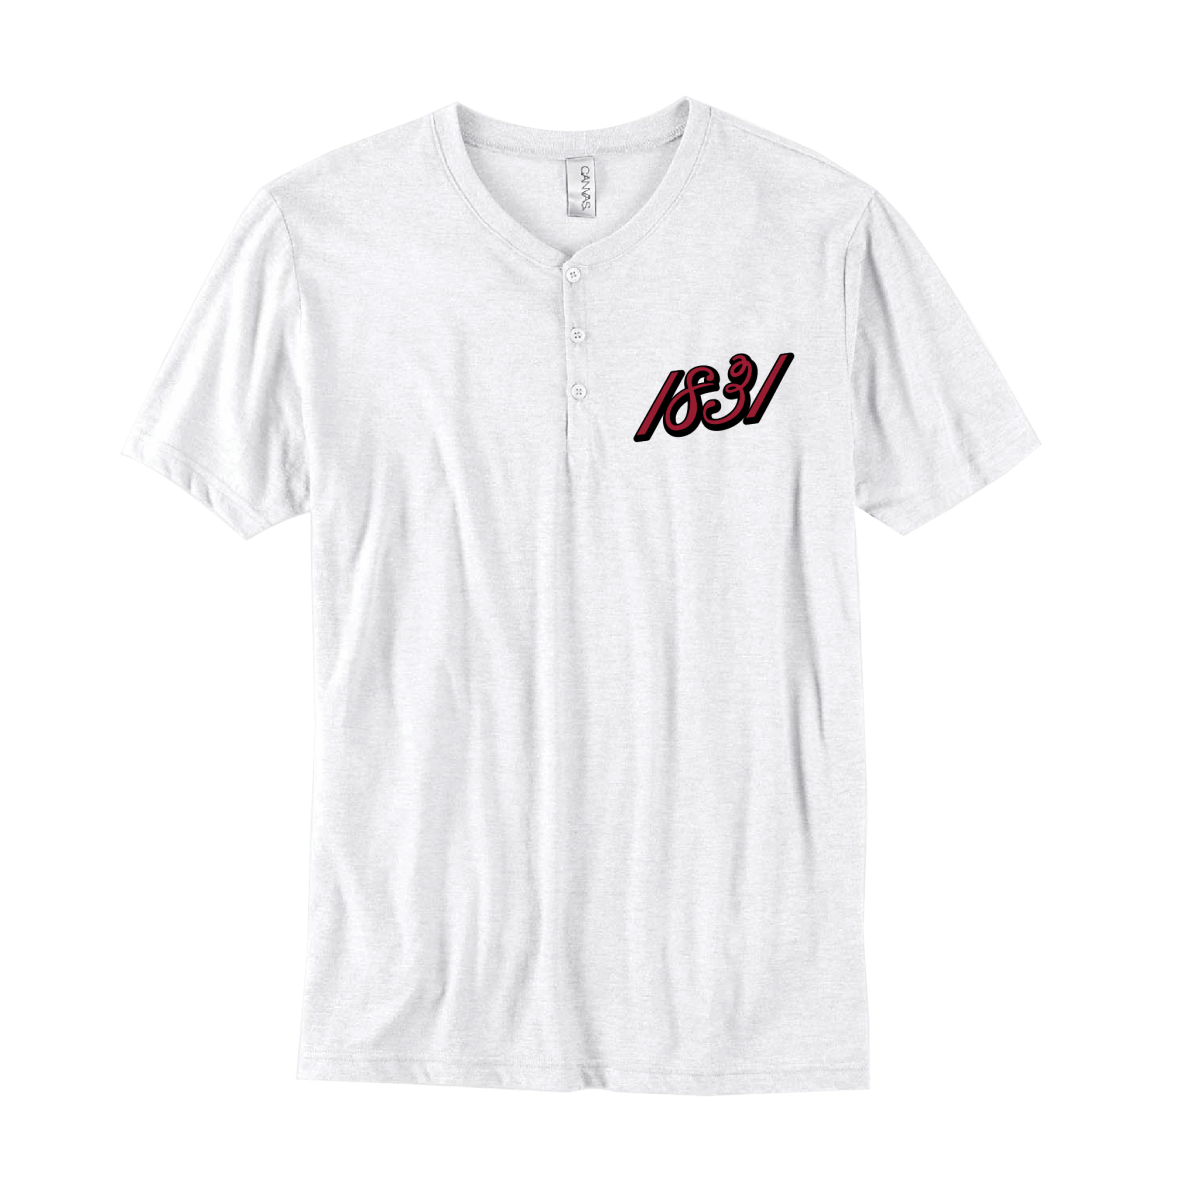 University of Alabama 1831 Henley T-Shirt